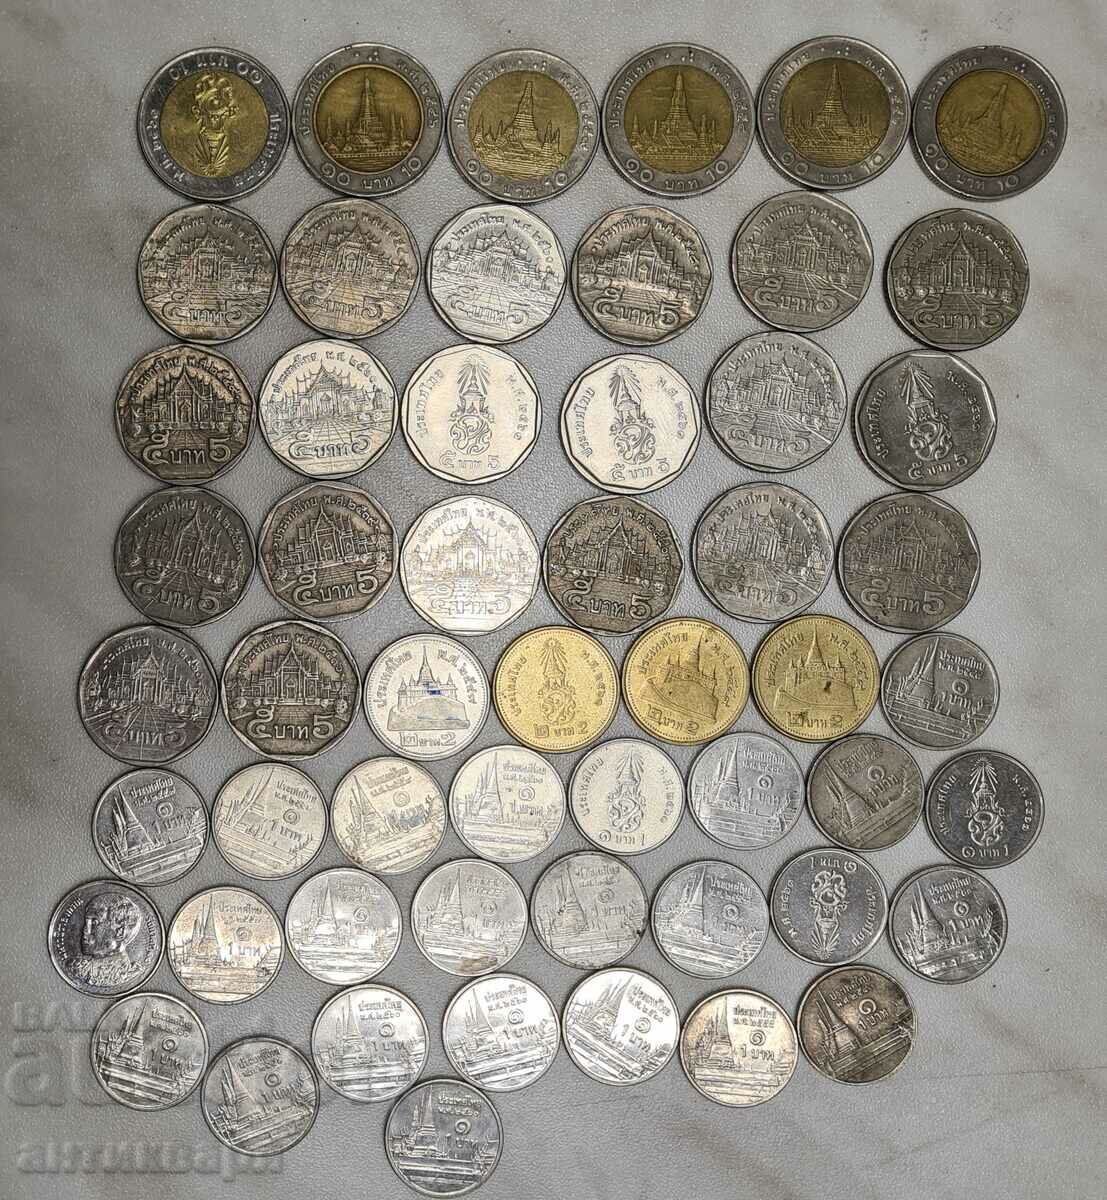 Thailanda 10 5 2 1 baht lot monede